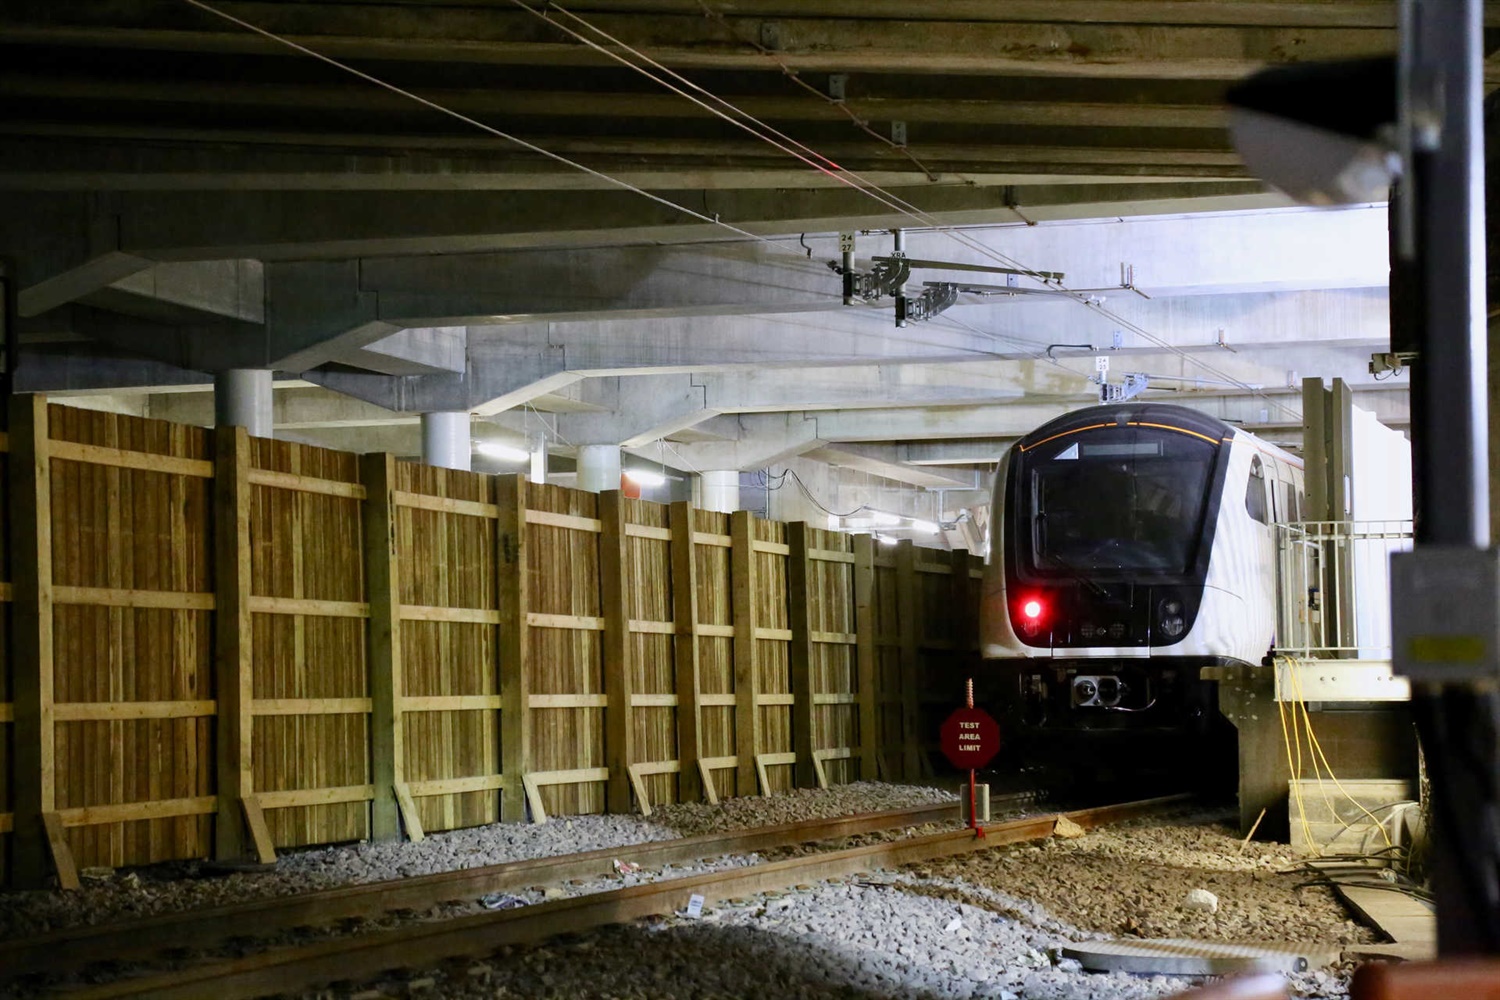 ‘Milestone moment’ as Elizabeth Line train makes successful debut in new tunnels